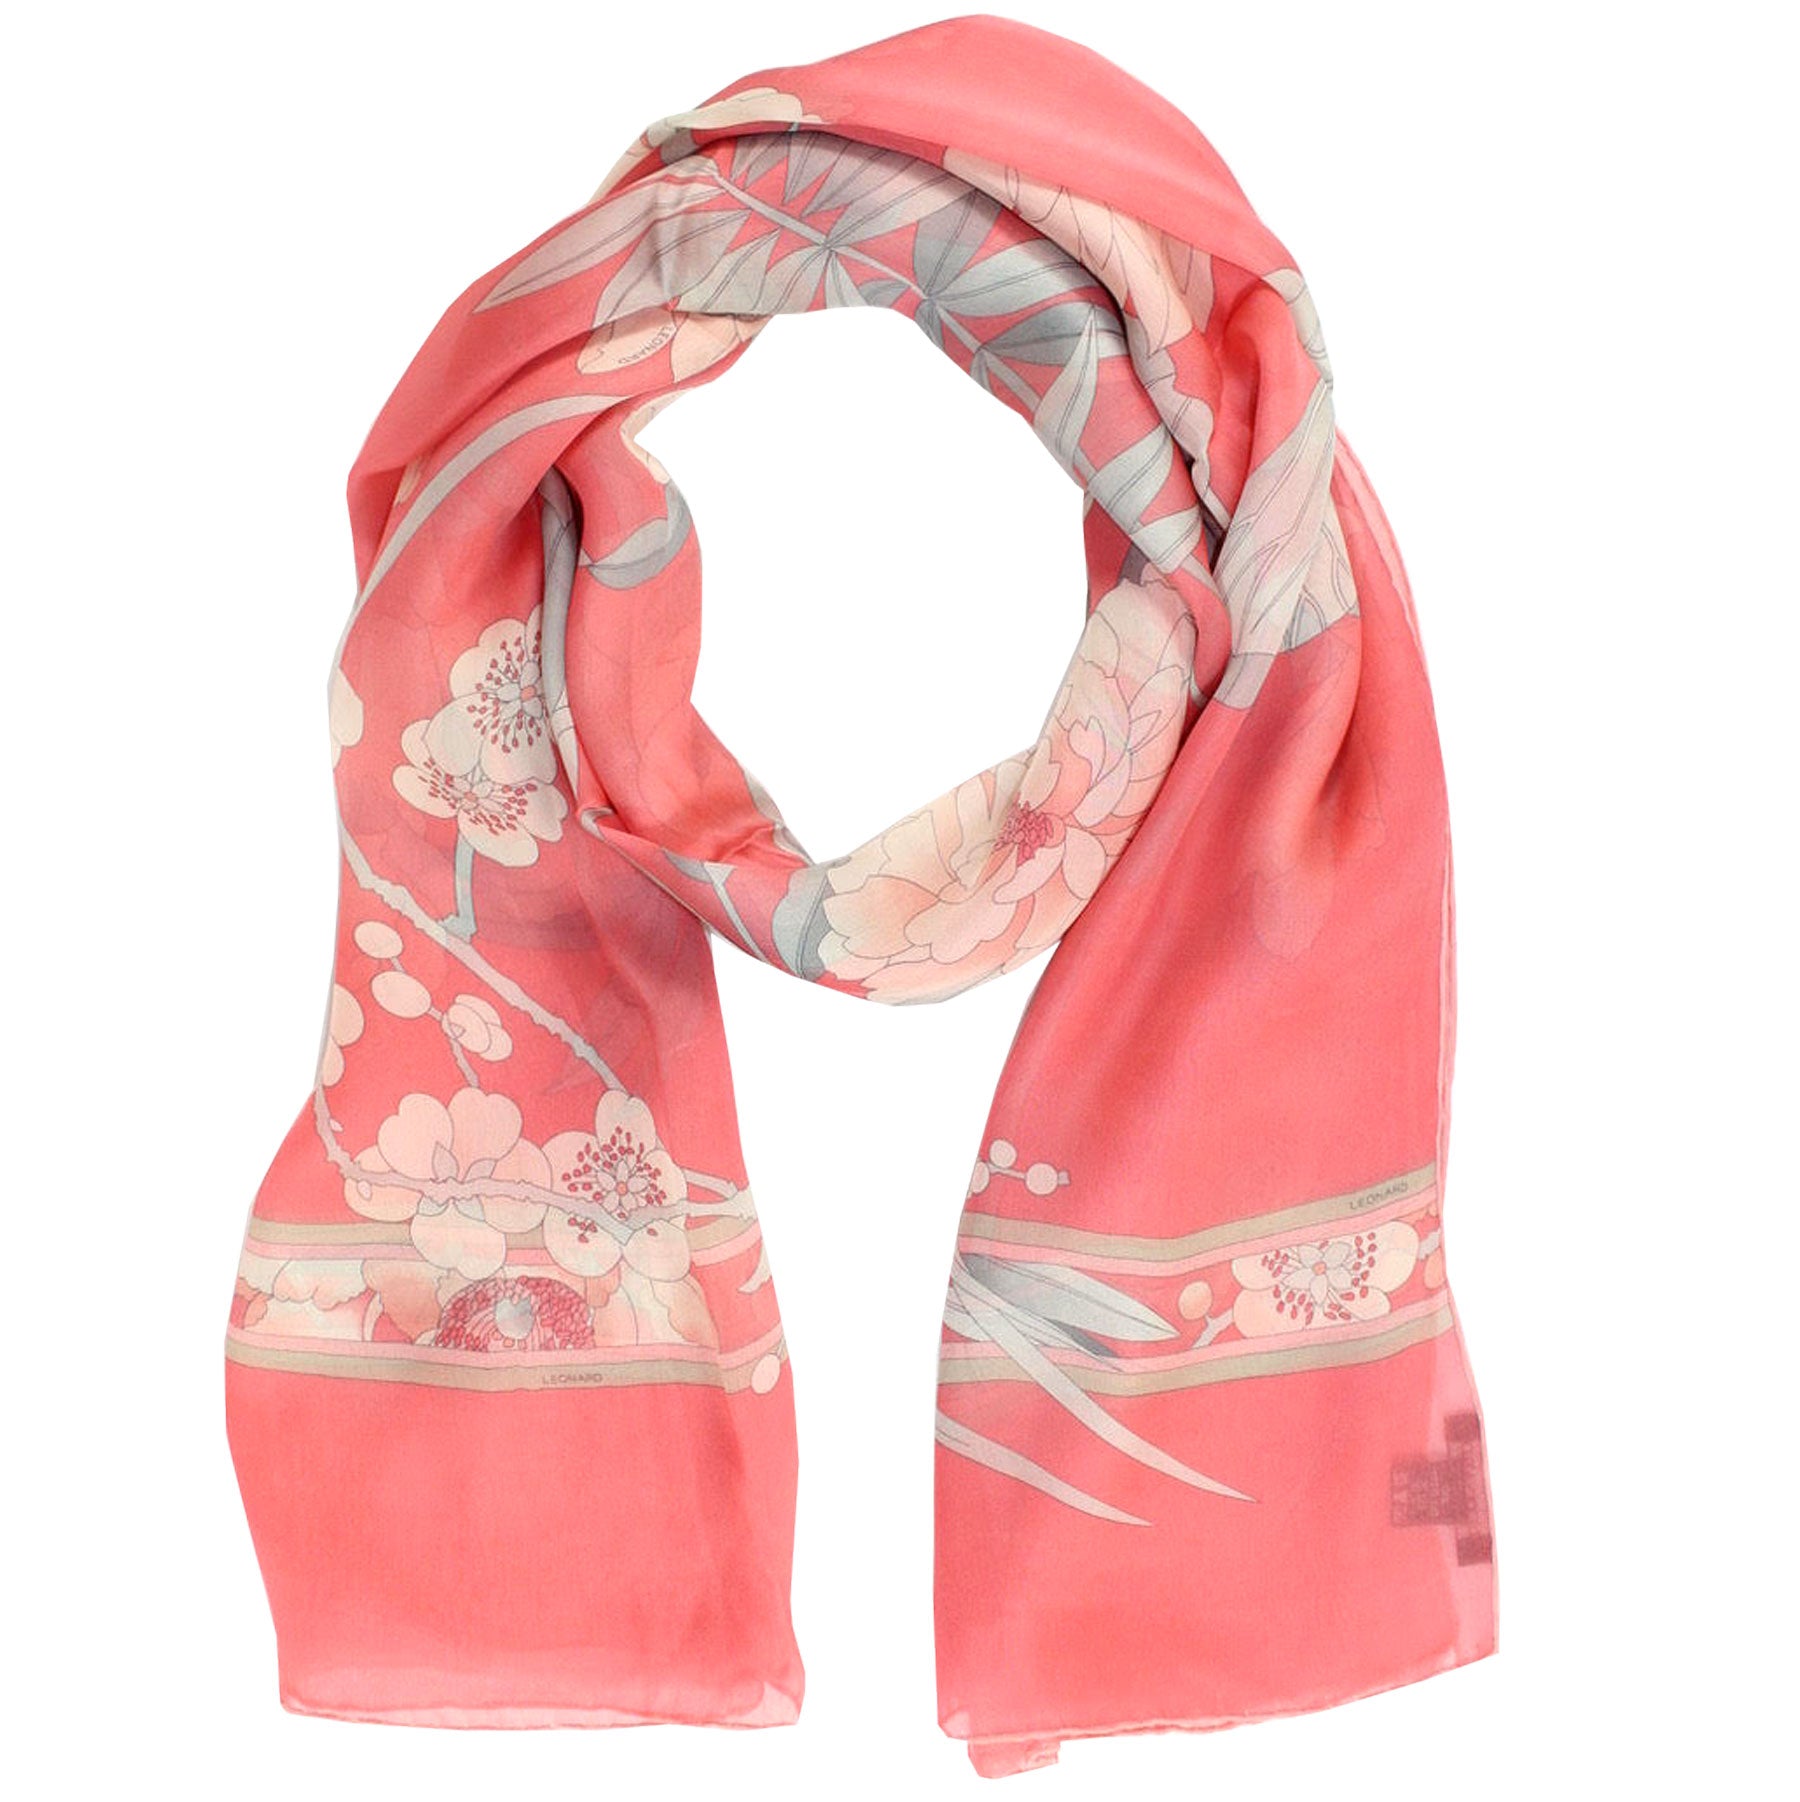 Leonard Paris Scarf Pink Gray Floral - Chiffon Silk Shawl